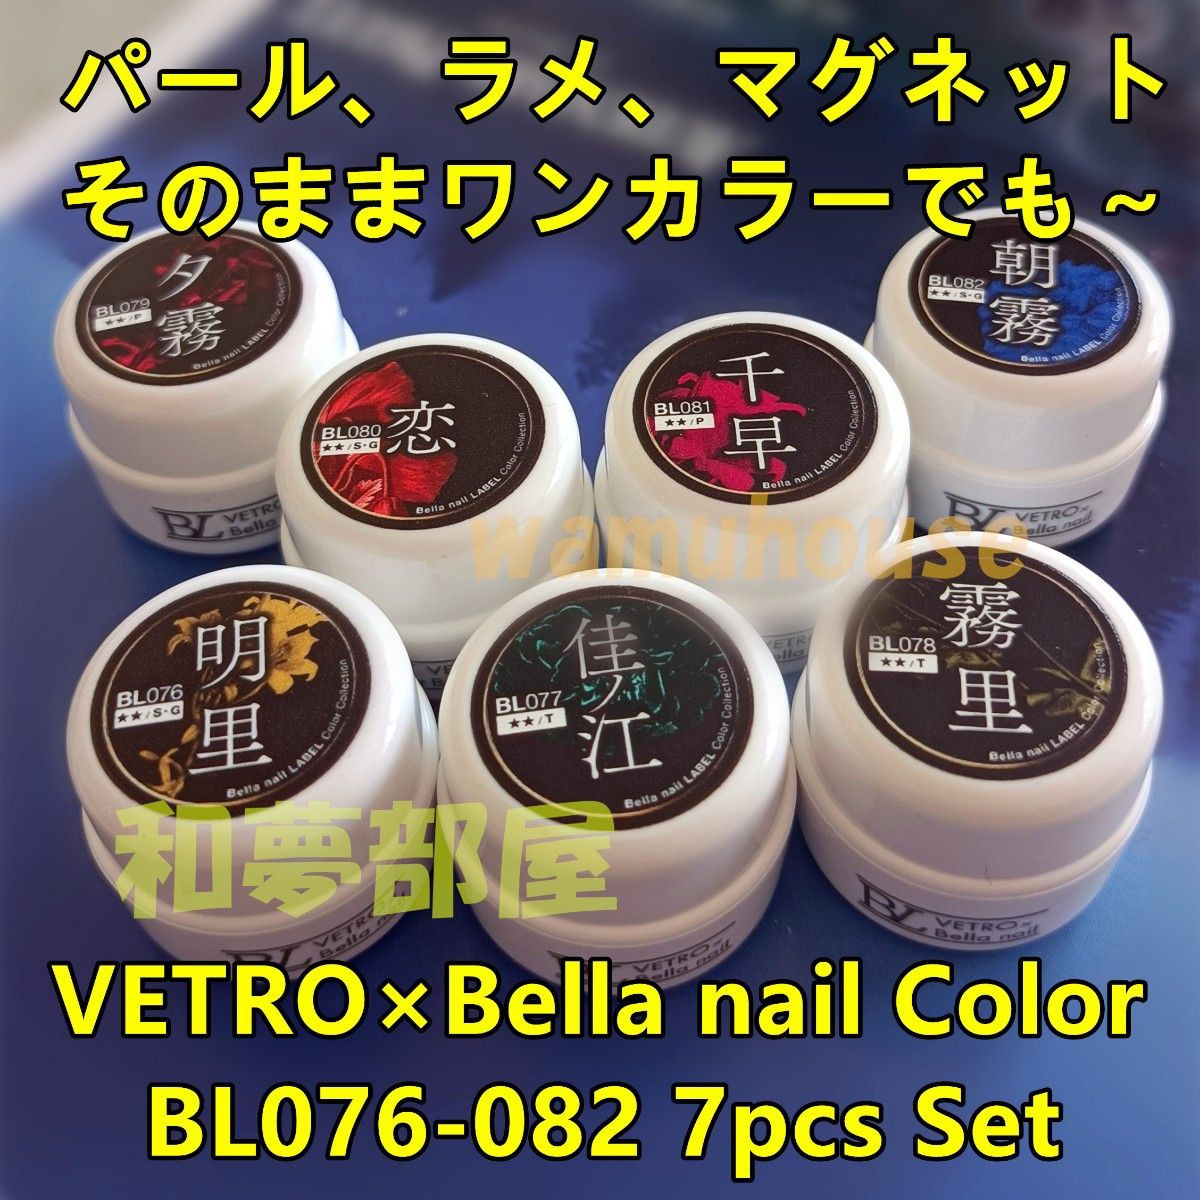 ☆BL076-082新品★ベトロBellanail艶やかカラー７色セット☆